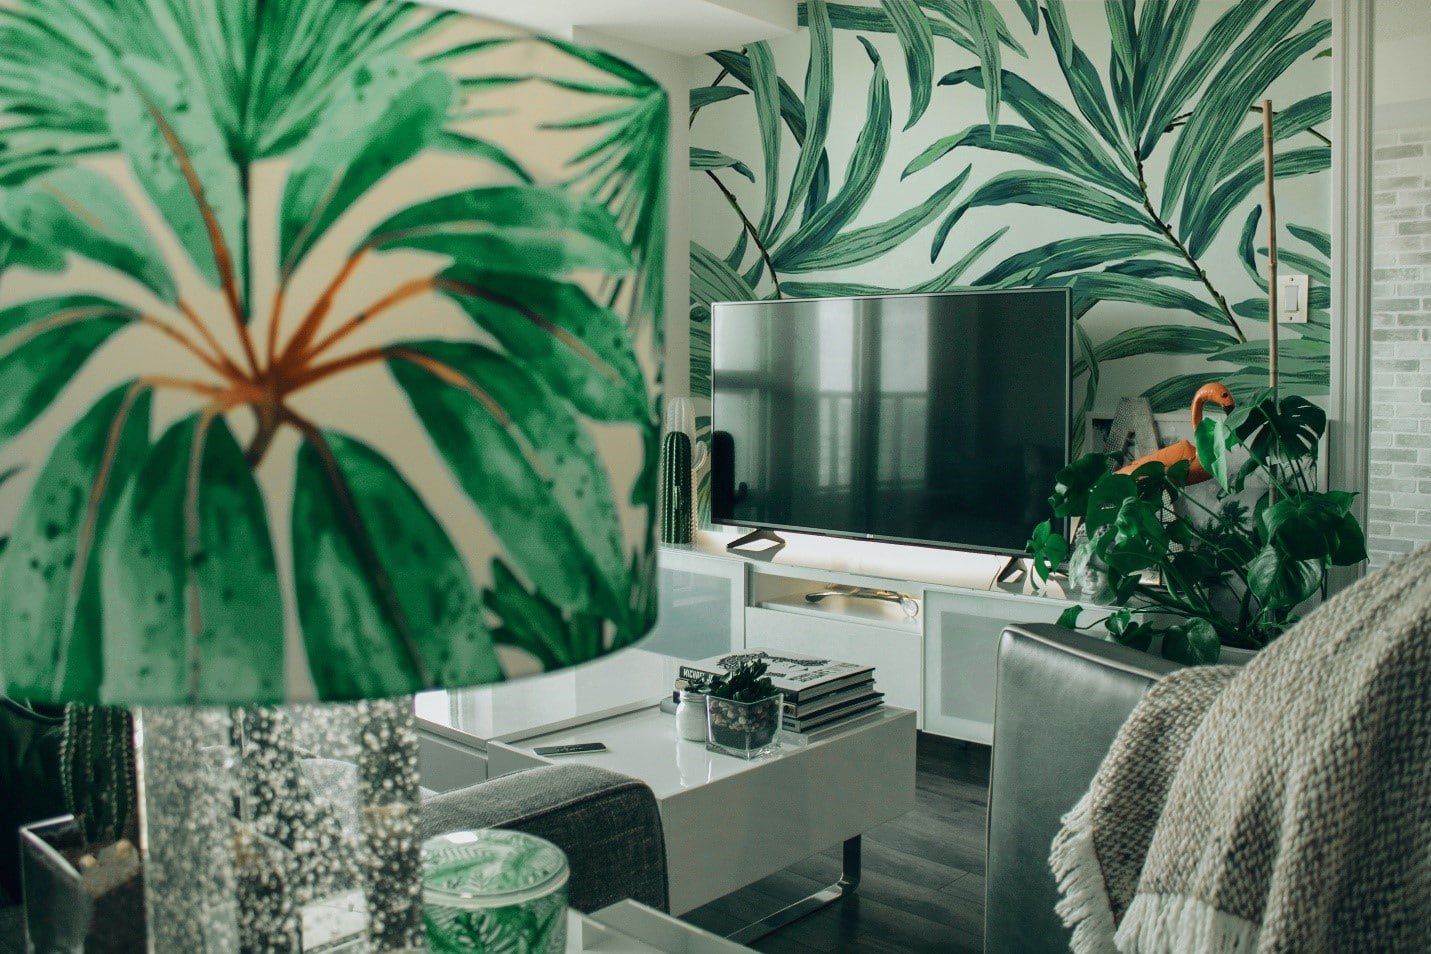 Interior designing with plants